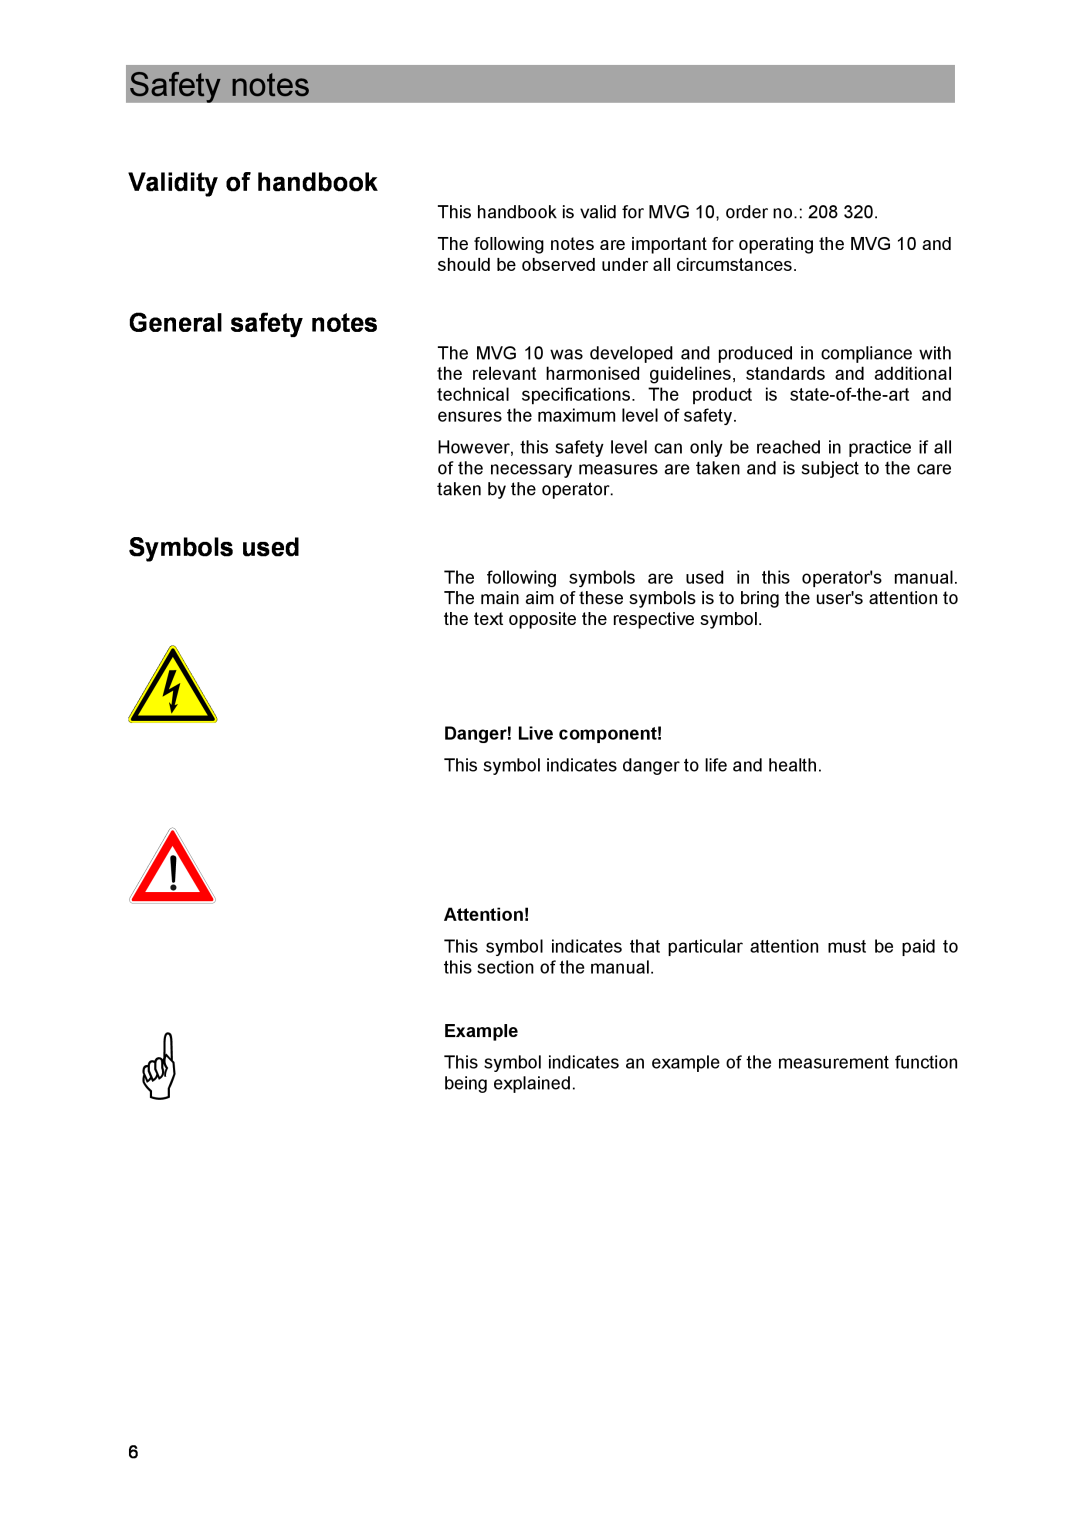 Kathrein MVG 10 manual Safety notes, Validity of handbook, General safety notes, Symbols used, Danger! Live component 